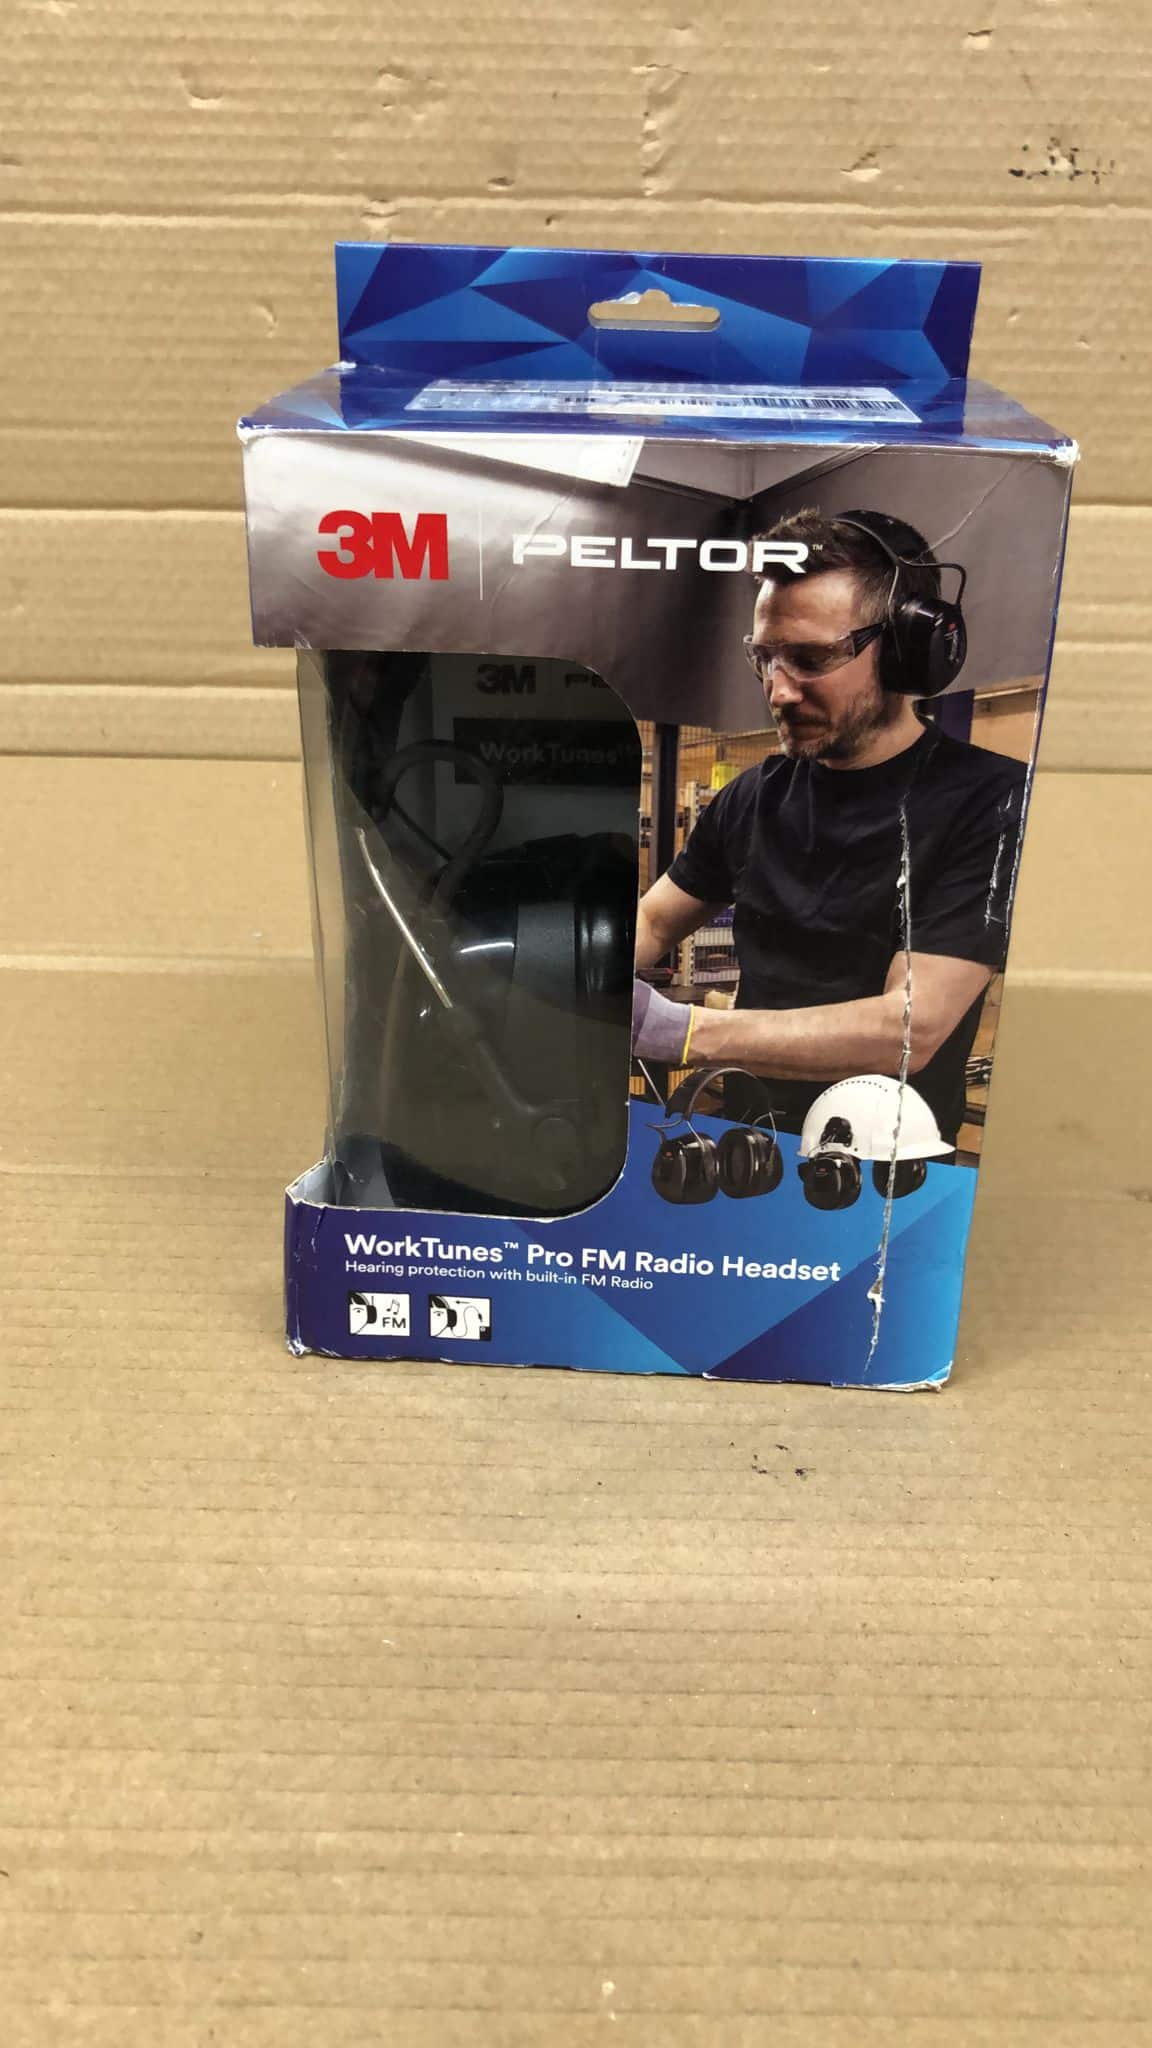 3M Peltor WorkTunes Pro FM Radio Headset Battery Powered,Black-3281